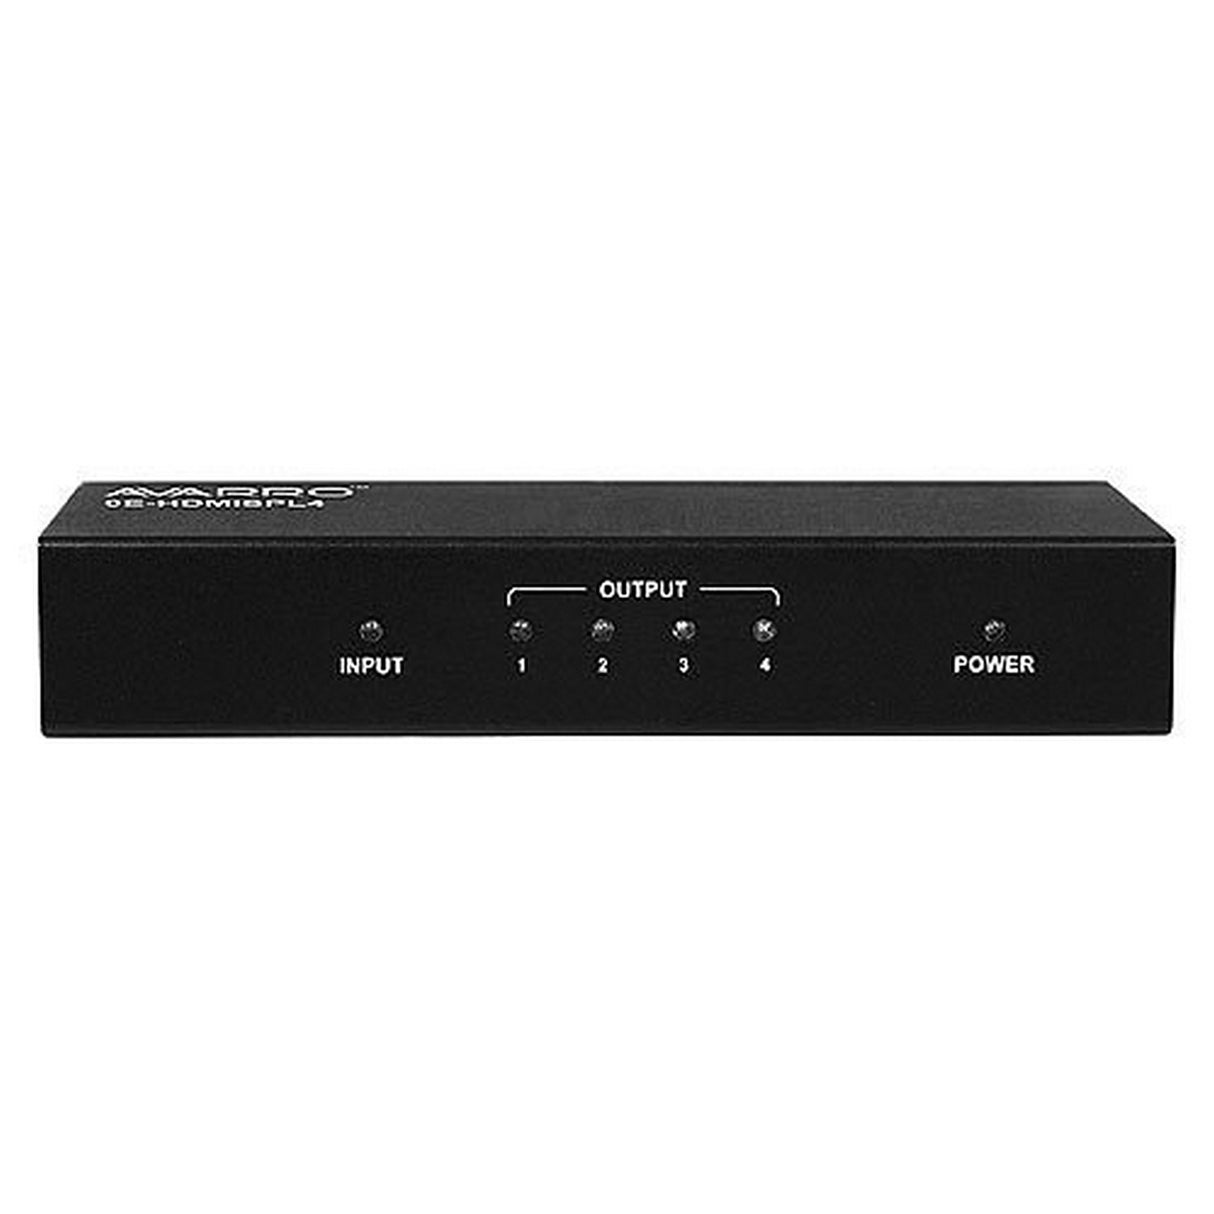 AVARRO 0E-HDMISPL4 1:4 Splitter for HDMI with Ultra HD 4K Support